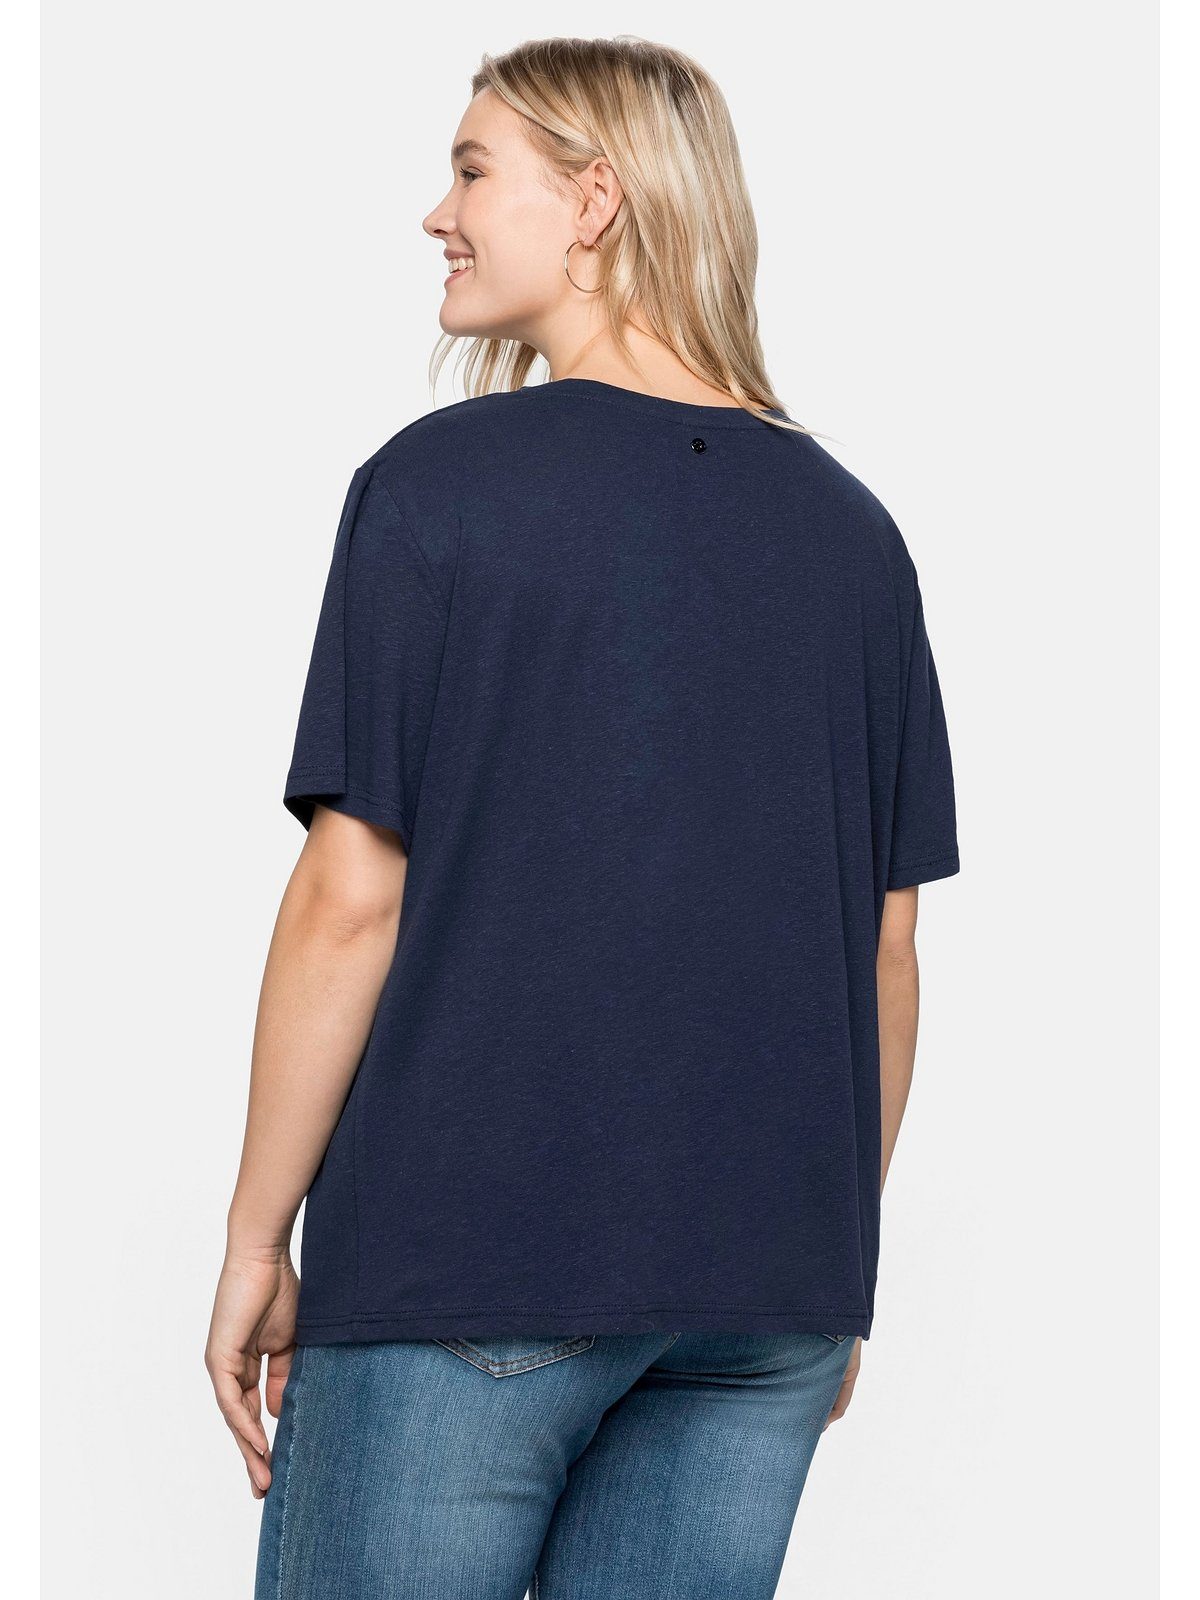 Leinen-Viskose-Mix Große Größen edlem aus marine Sheego T-Shirt